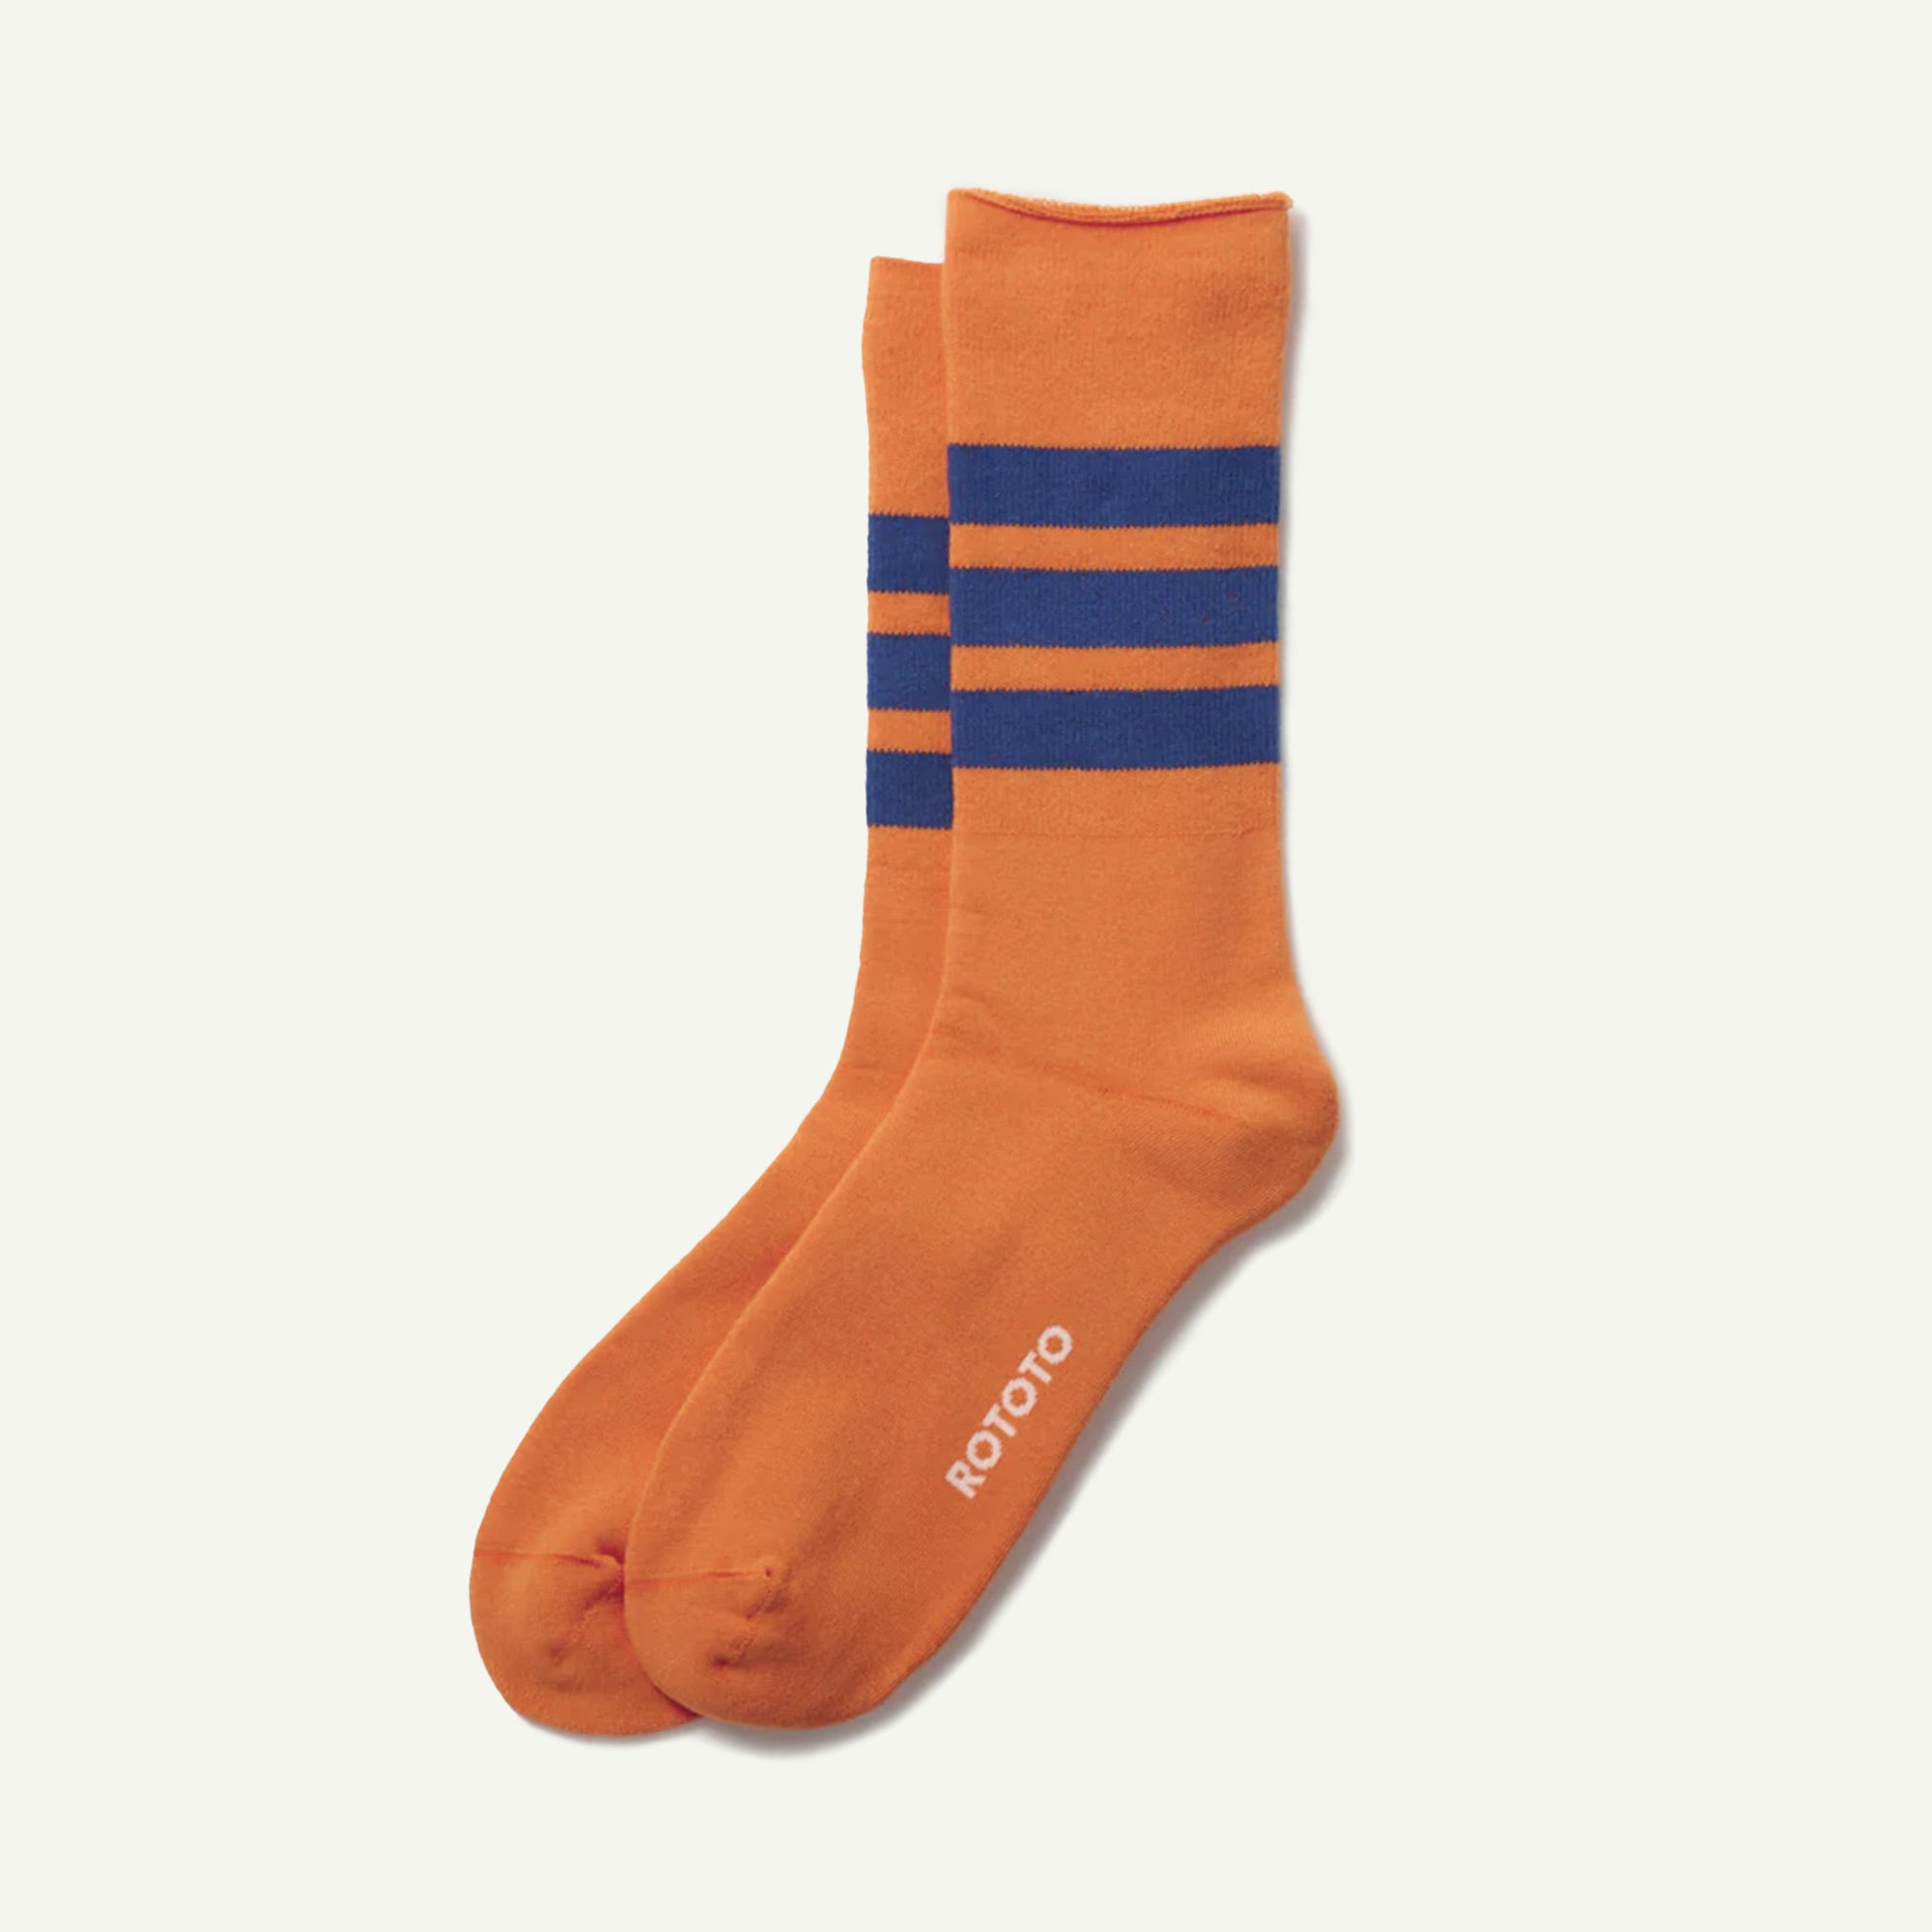 Rototo Orange/Blue Stripes Socks